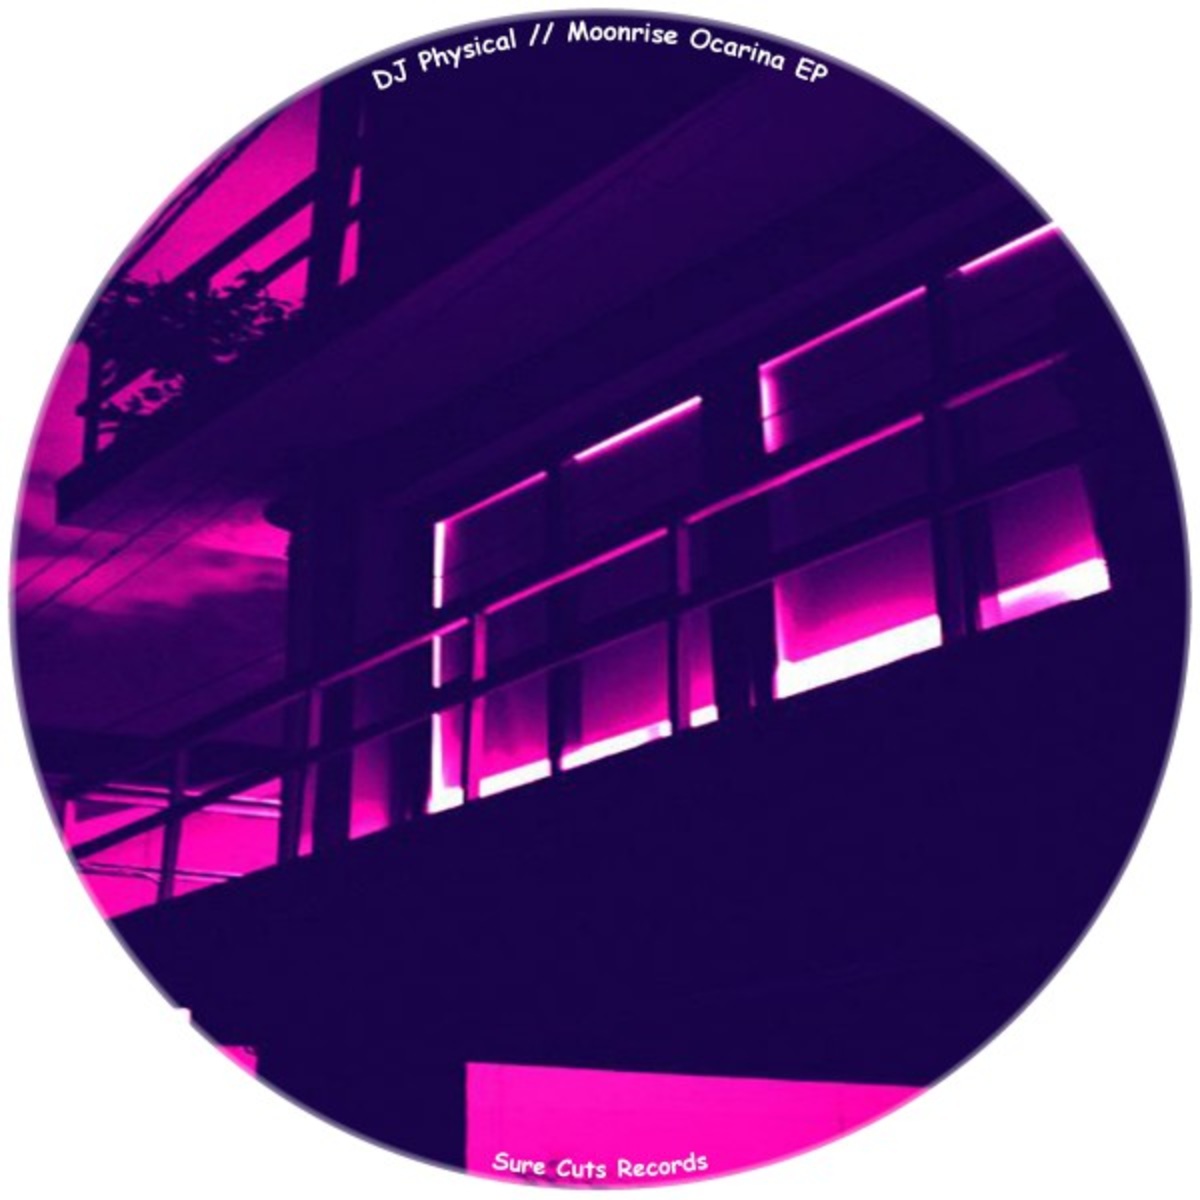 DJ Physical - Moonrise Ocarina EP / Sure Cuts Records